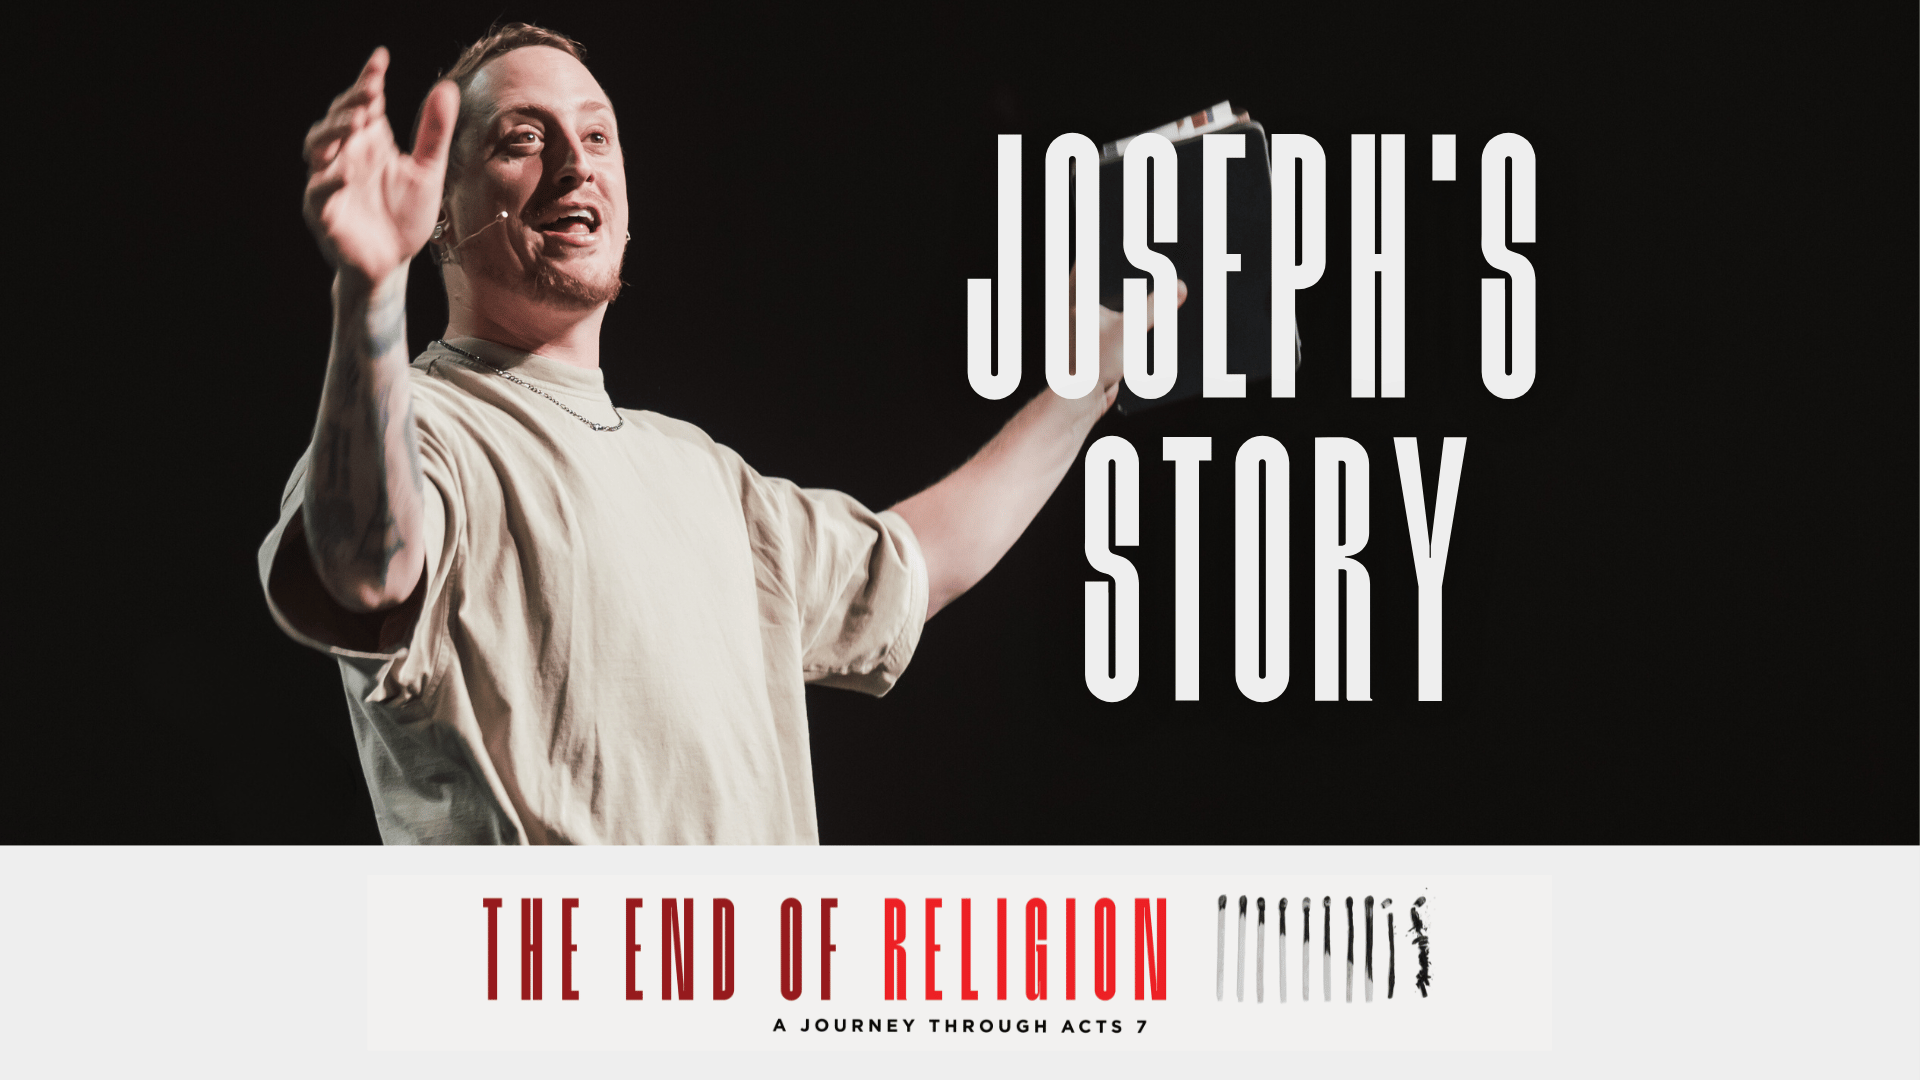 Joseph’s Story